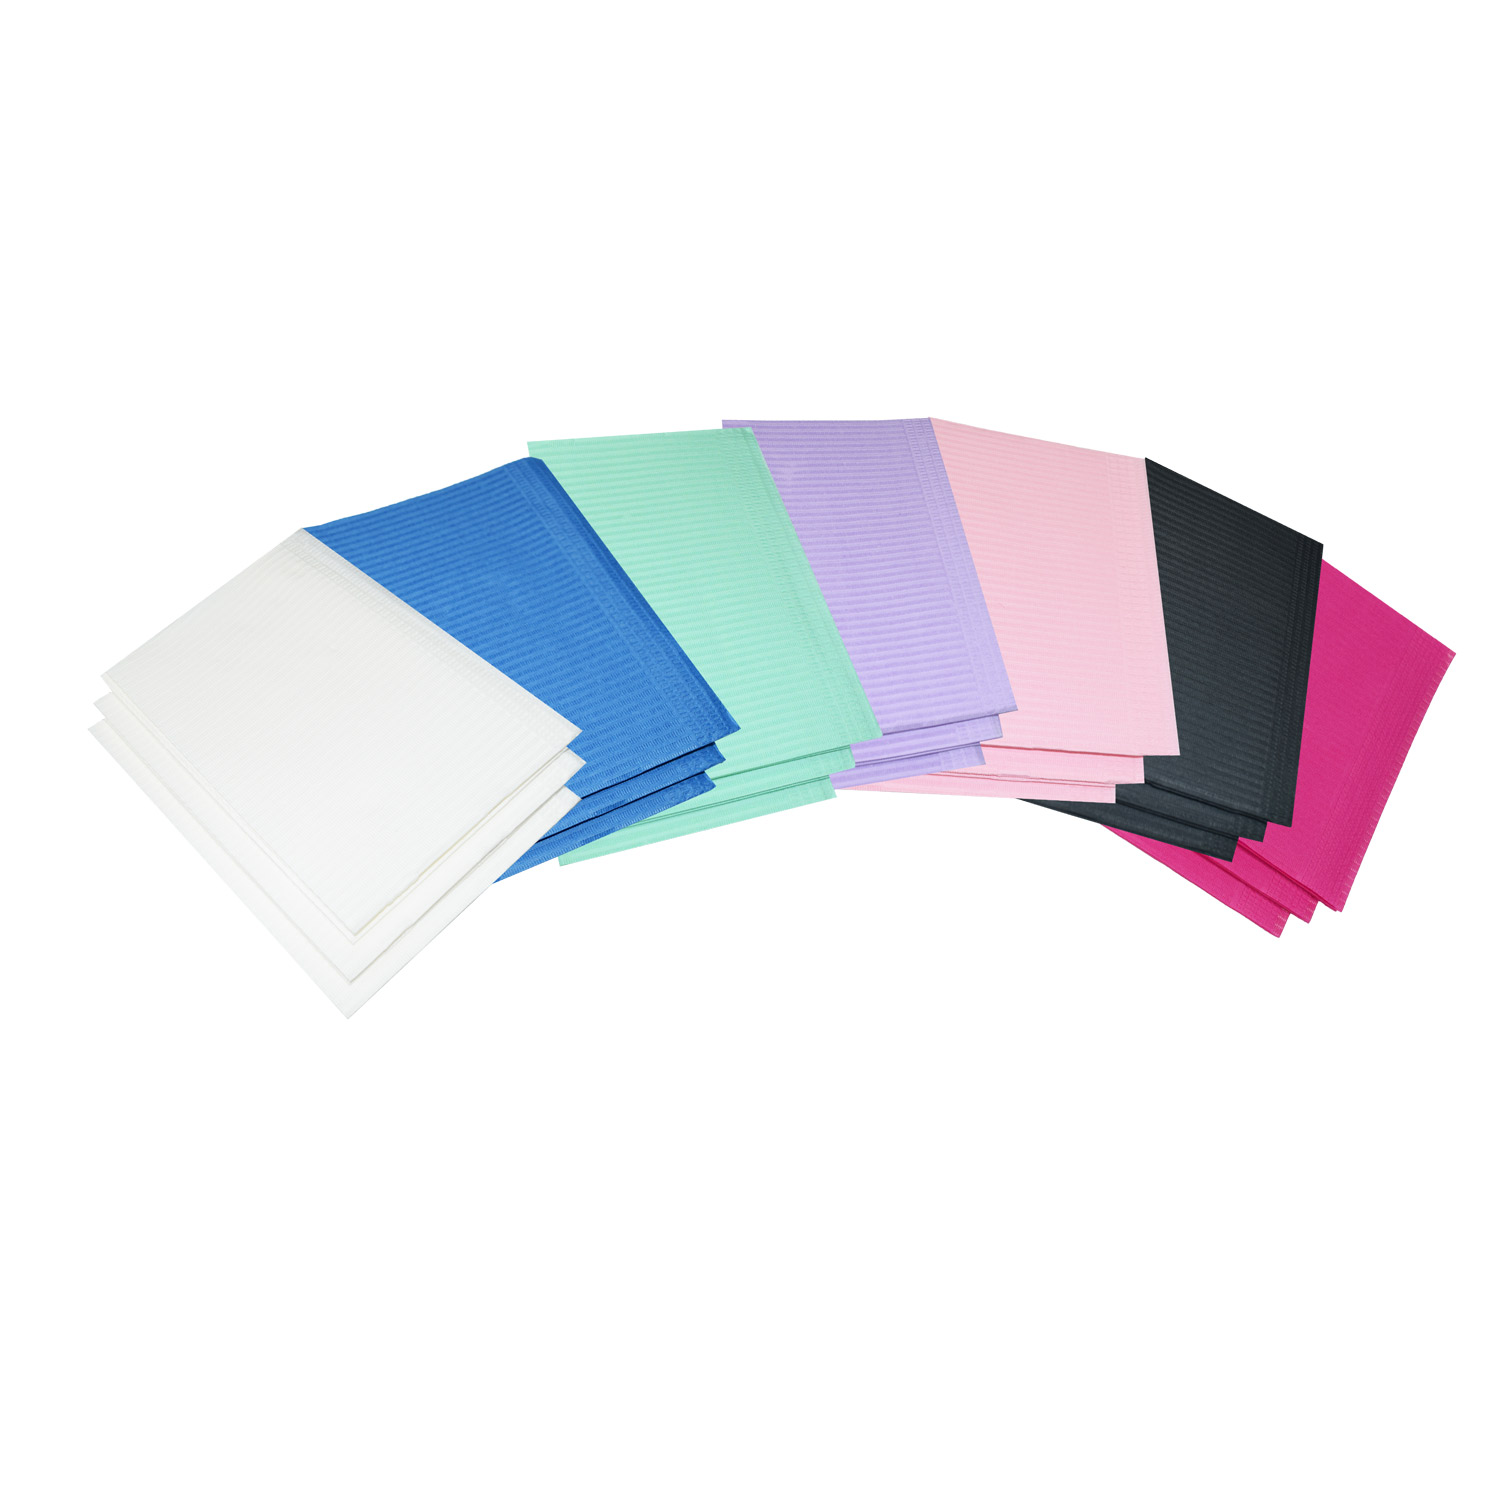 NITRAS® Medical Patientenservietten, verschiedene Farben, 500 Stück